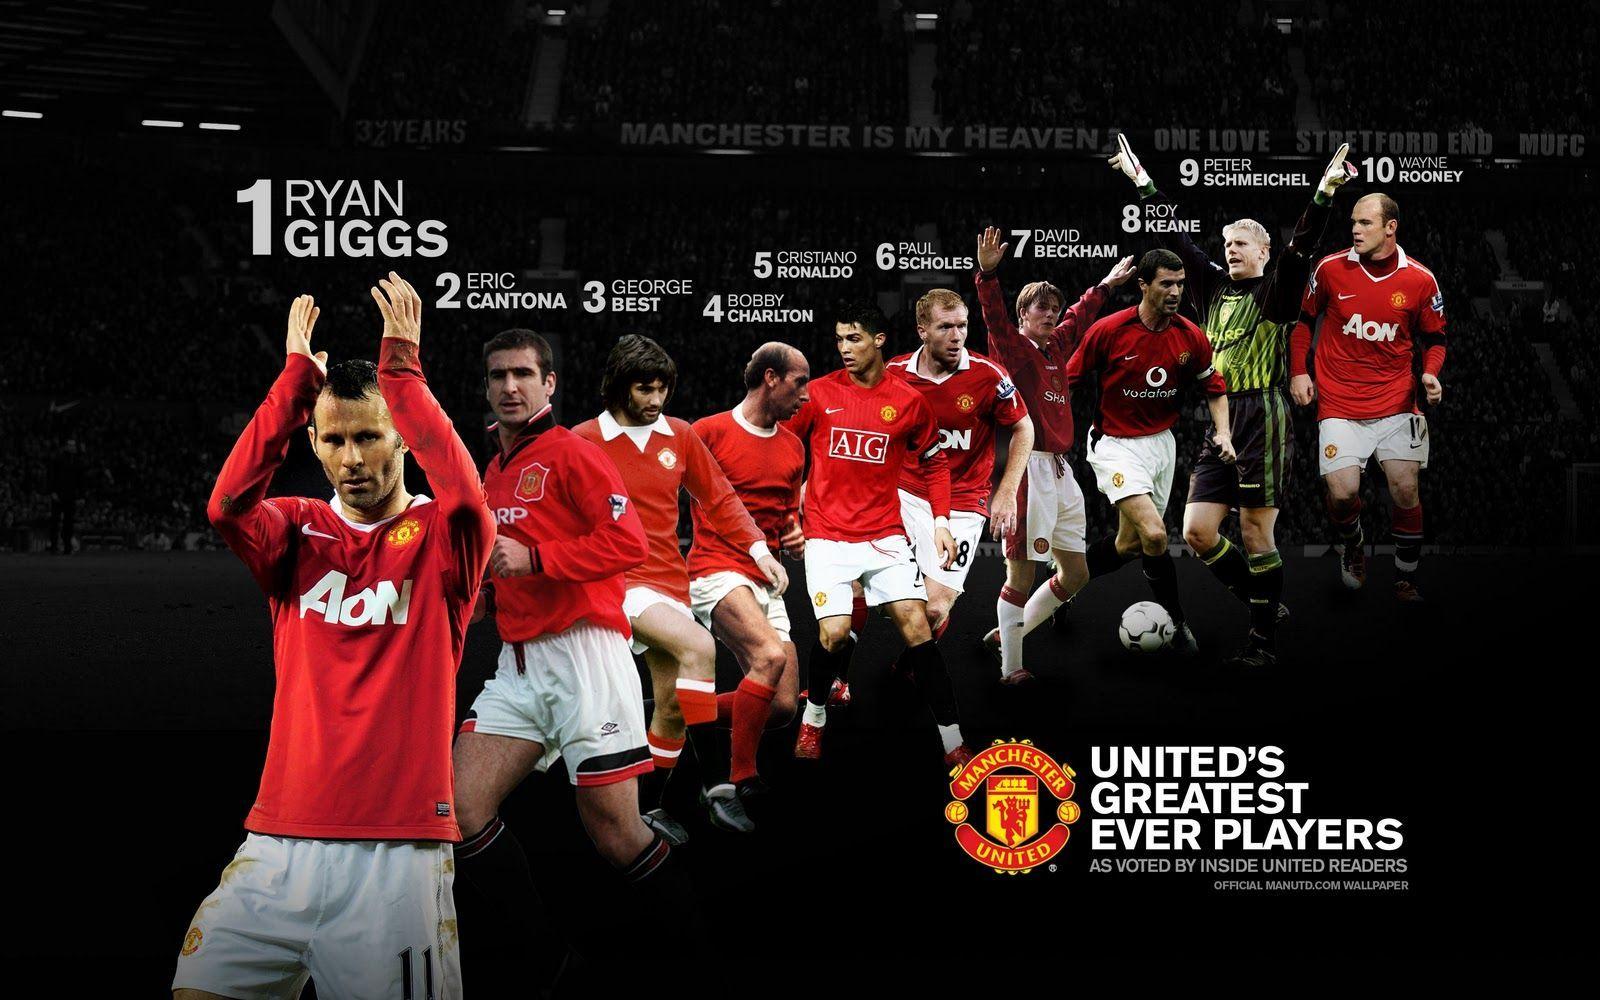 manchester united team wallpaper